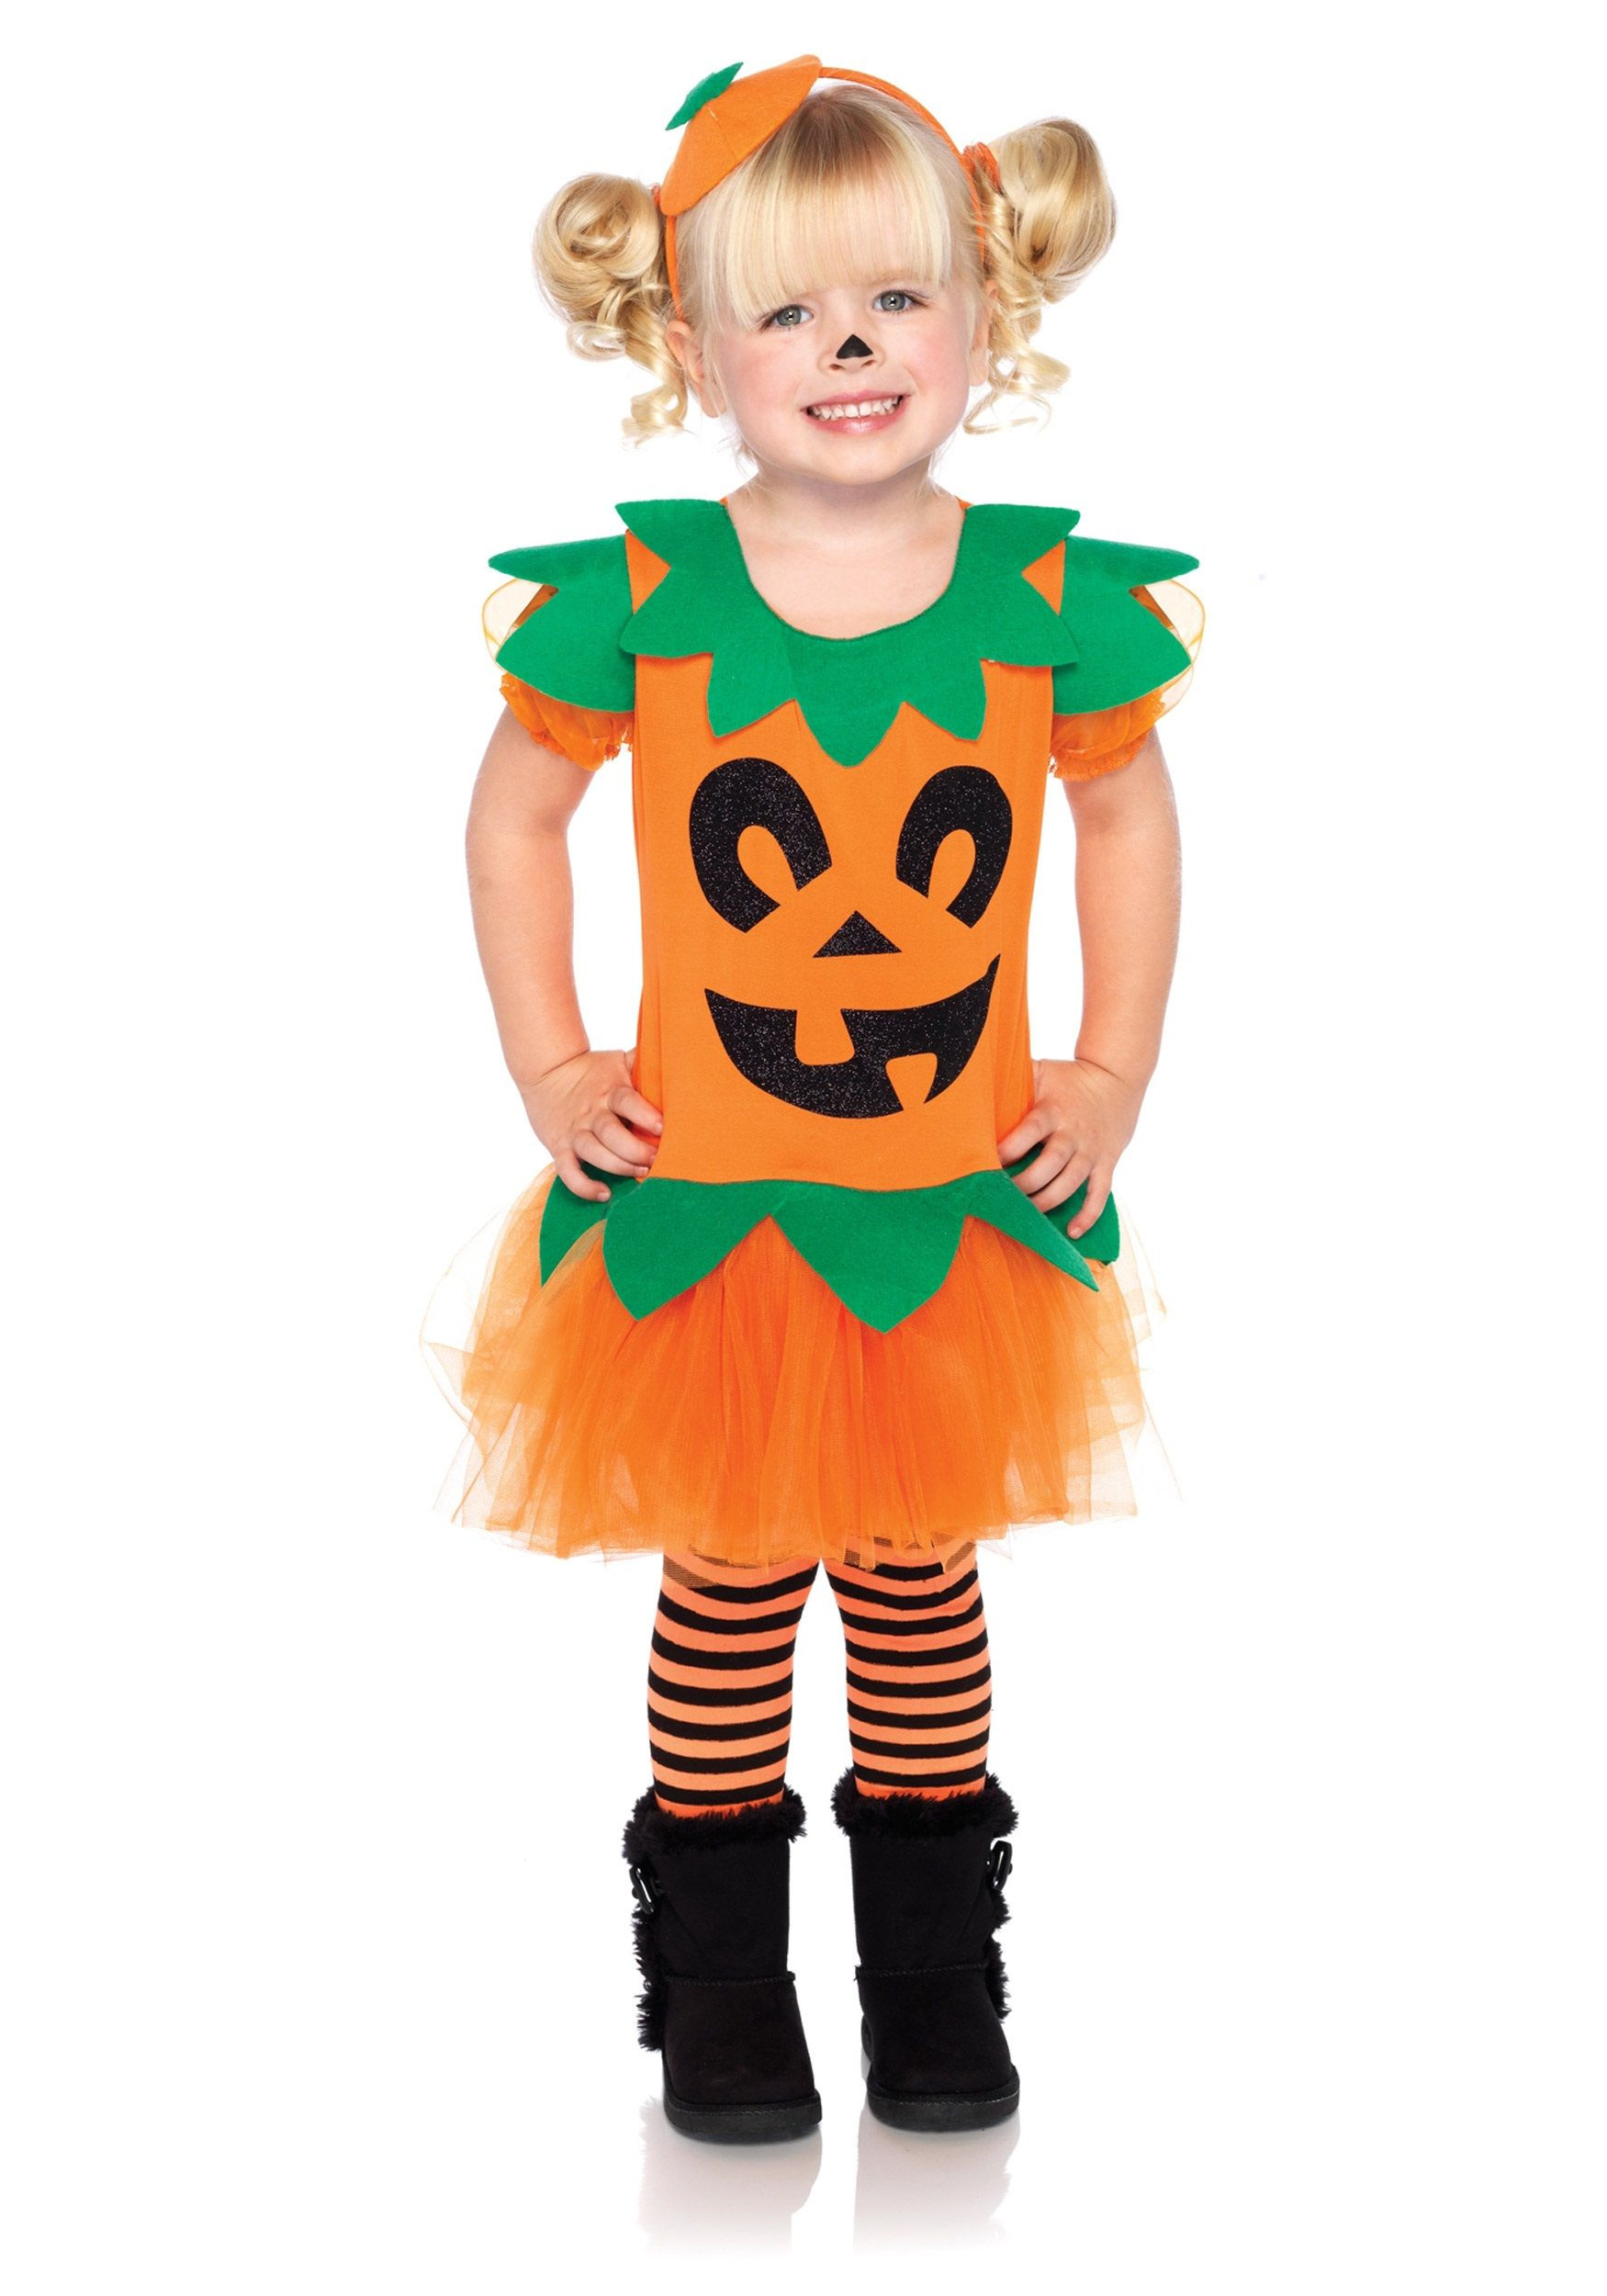 DIY Pumpkin Costume Toddler
 Child Pretty Pumpkin Costume now